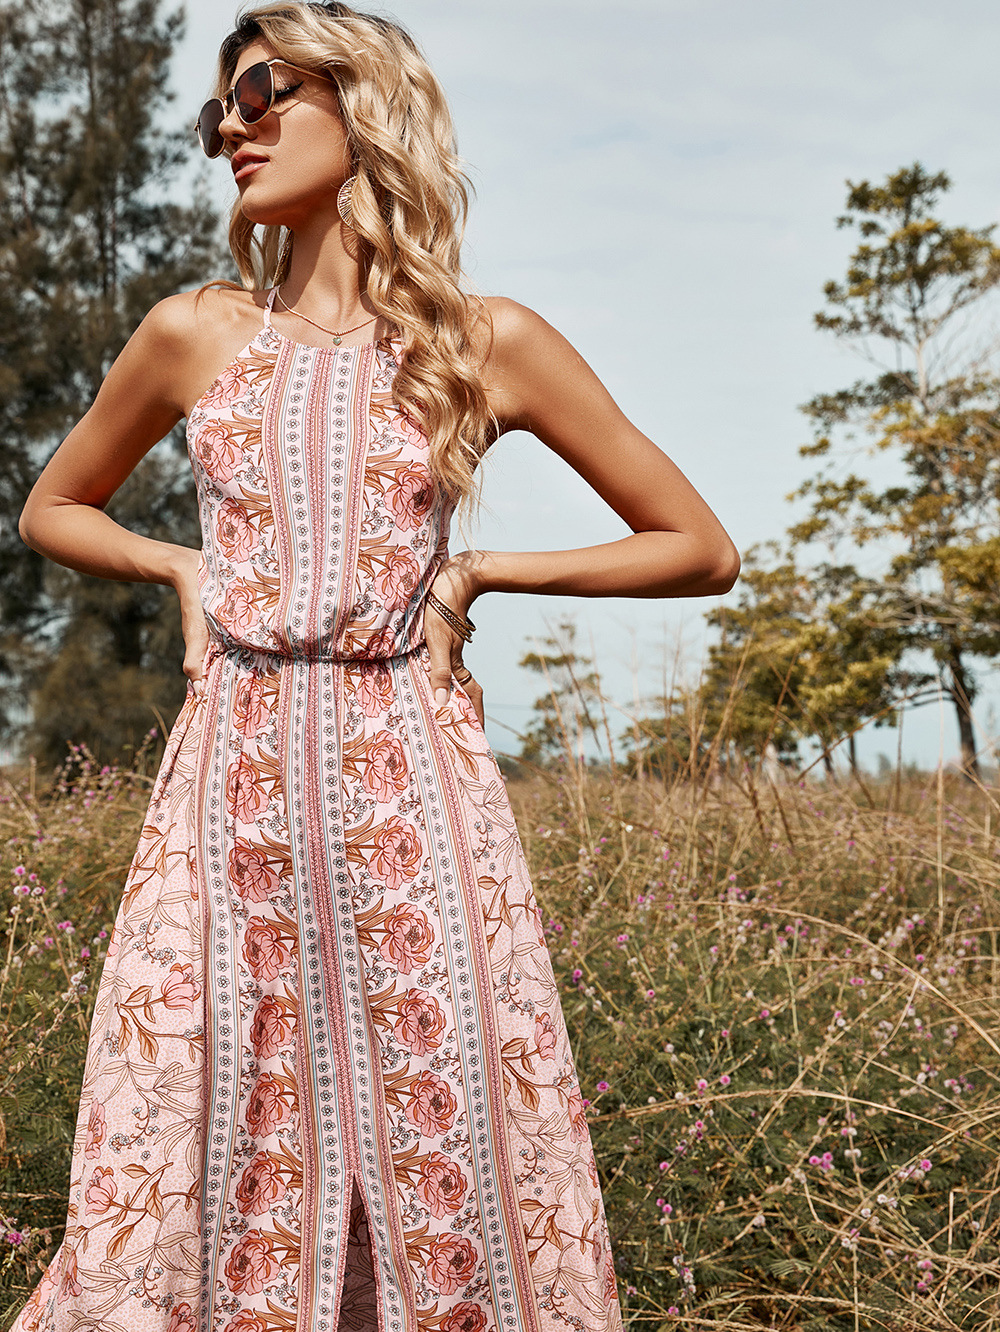 Sleeveless spring and summer dress for women